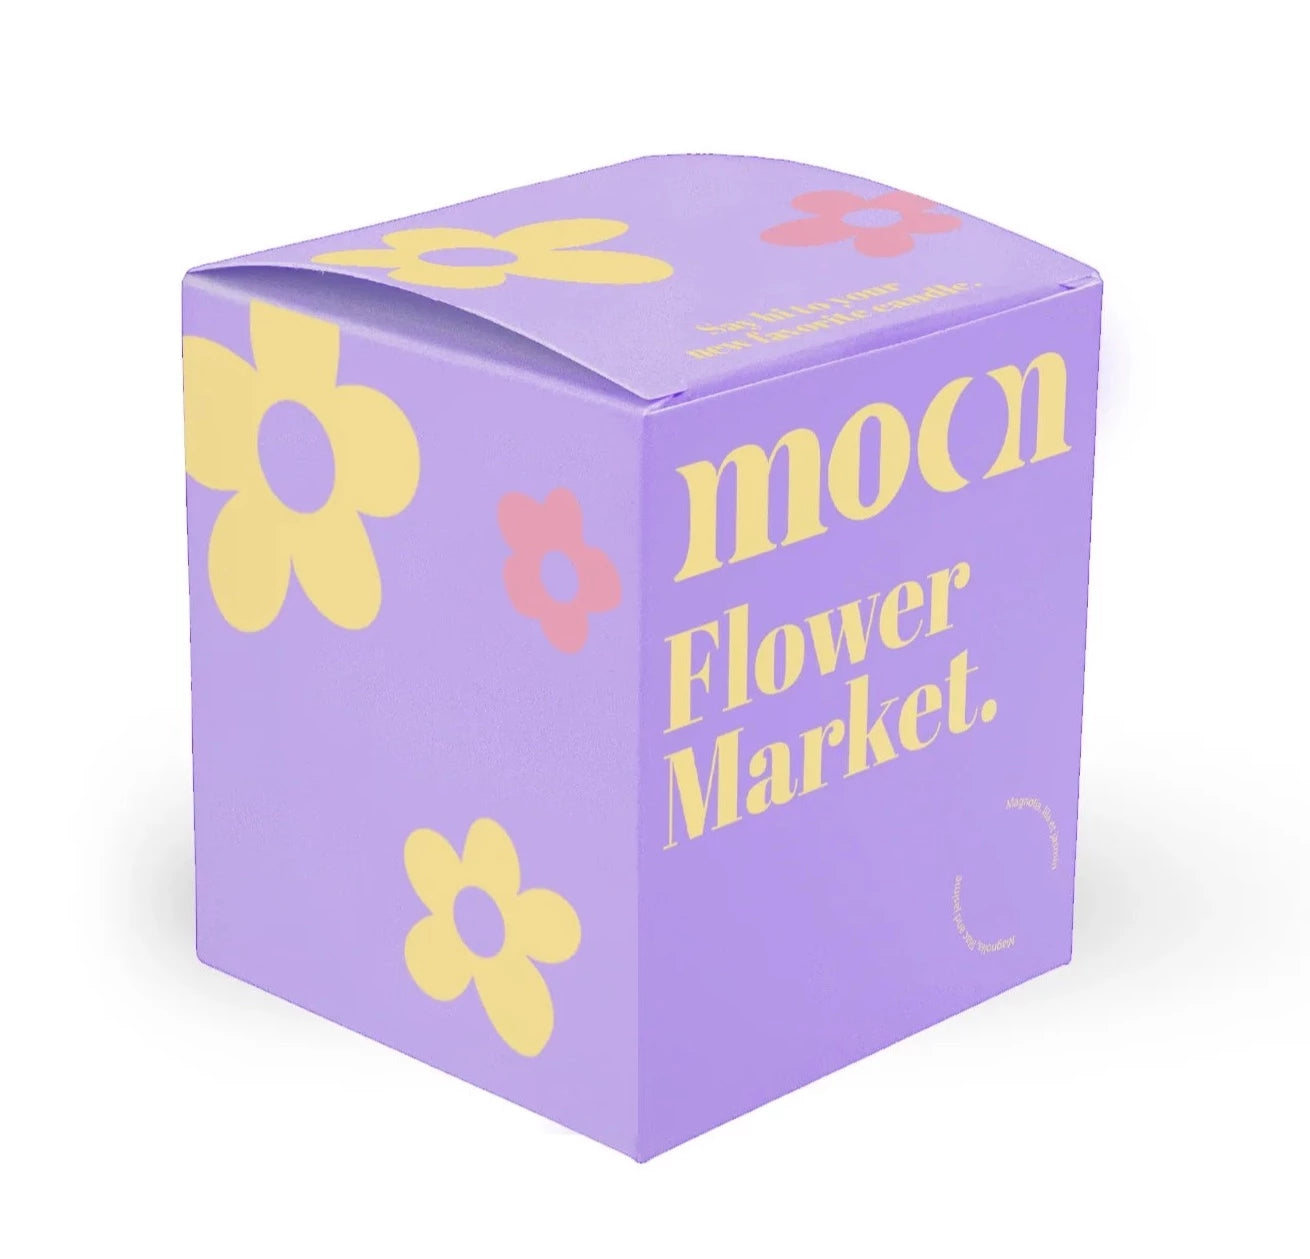 Flower Market Candle